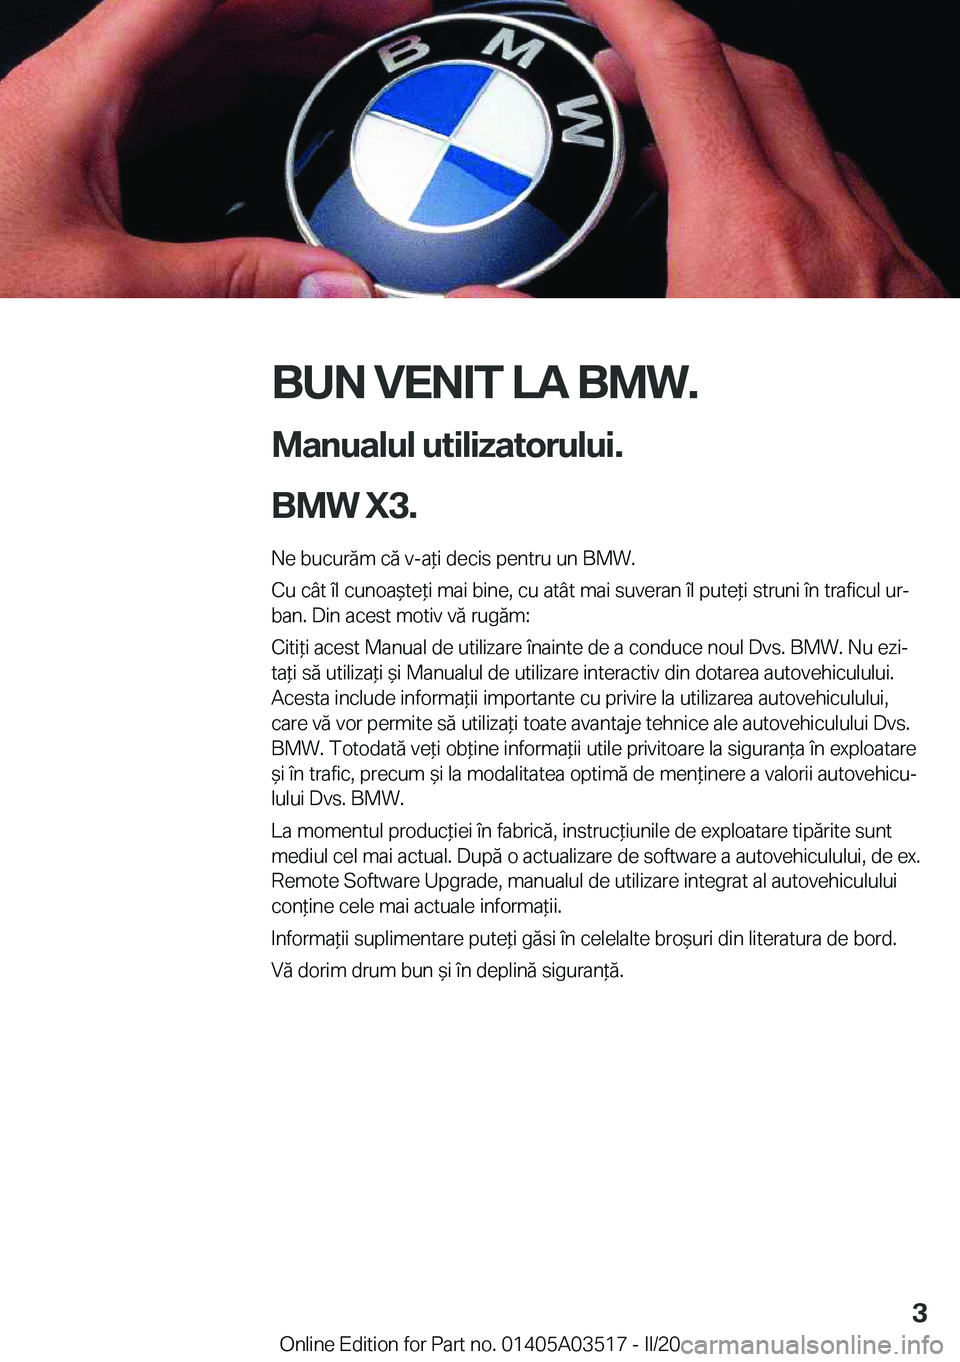 BMW X3 2020  Ghiduri De Utilizare (in Romanian) �B�U�N��V�E�N�I�T��L�A��B�M�W�.�M�a�n�u�a�l�u�l��u�t�i�l�i�z�a�t�o�r�u�l�u�i�.
�B�M�W��X�3�. �N�e��b�u�c�u�r�ă�m��c�ă��v�-�a*�i��d�e�c�i�s��p�e�n�t�r�u��u�n��B�M�W�.
�C�u��c�